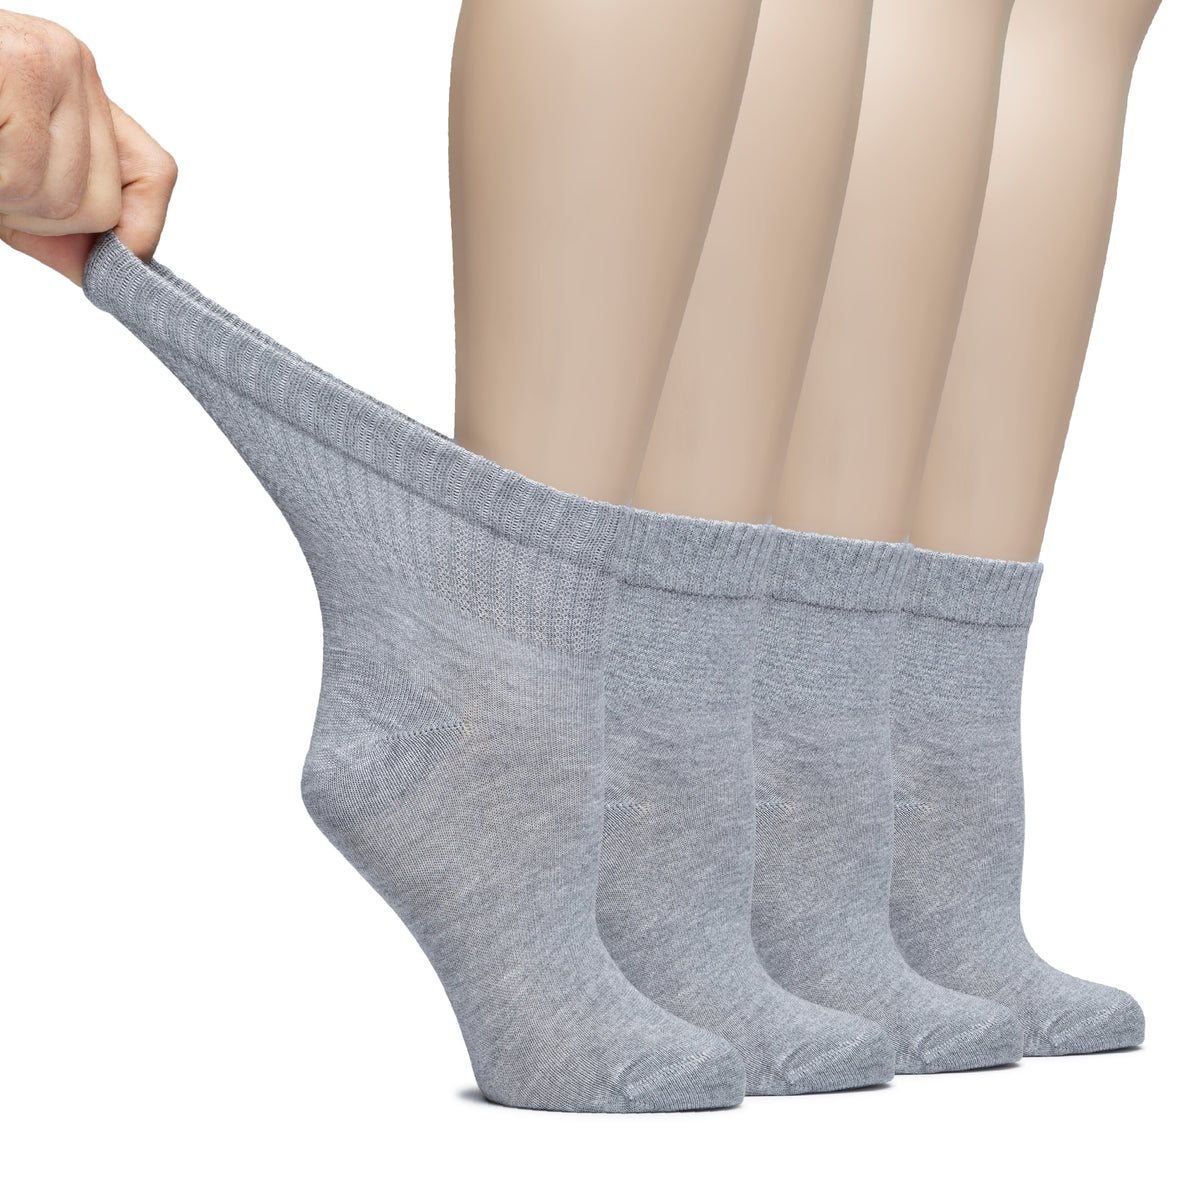 Hugh Ugoli Lightweight Women's Diabetic Ankle Socks Bamboo Thin Socks Seamless Toe and Non-Binding Top, 4 Pairs, , Shoe Size: 6-9/10-12 | Shoe Size: 6-9 | Lilac